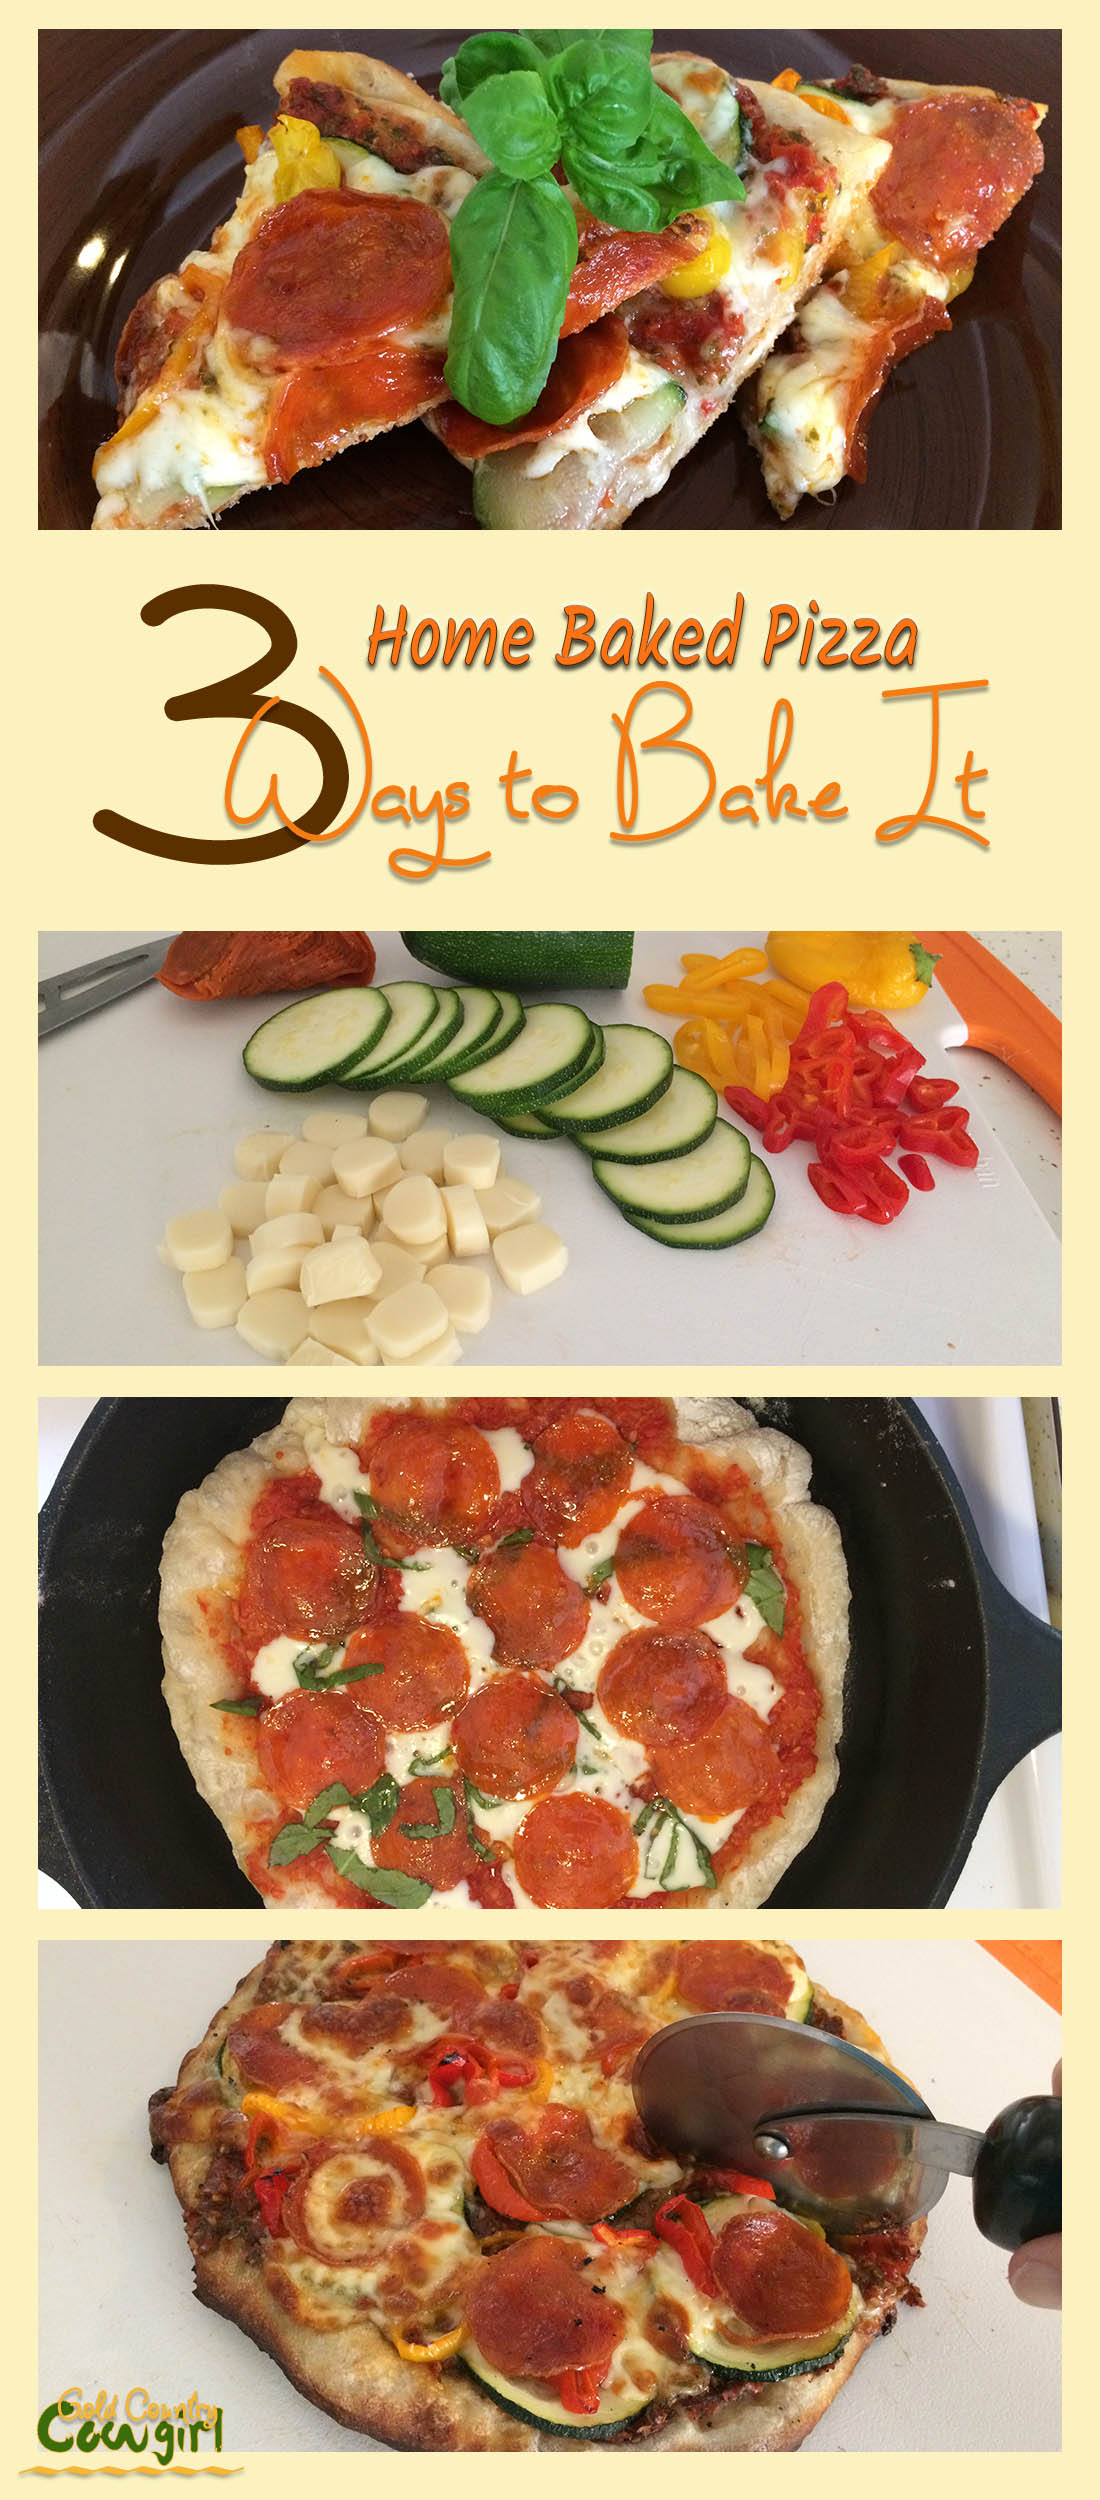 Baking Pizza - 3 ways to bake